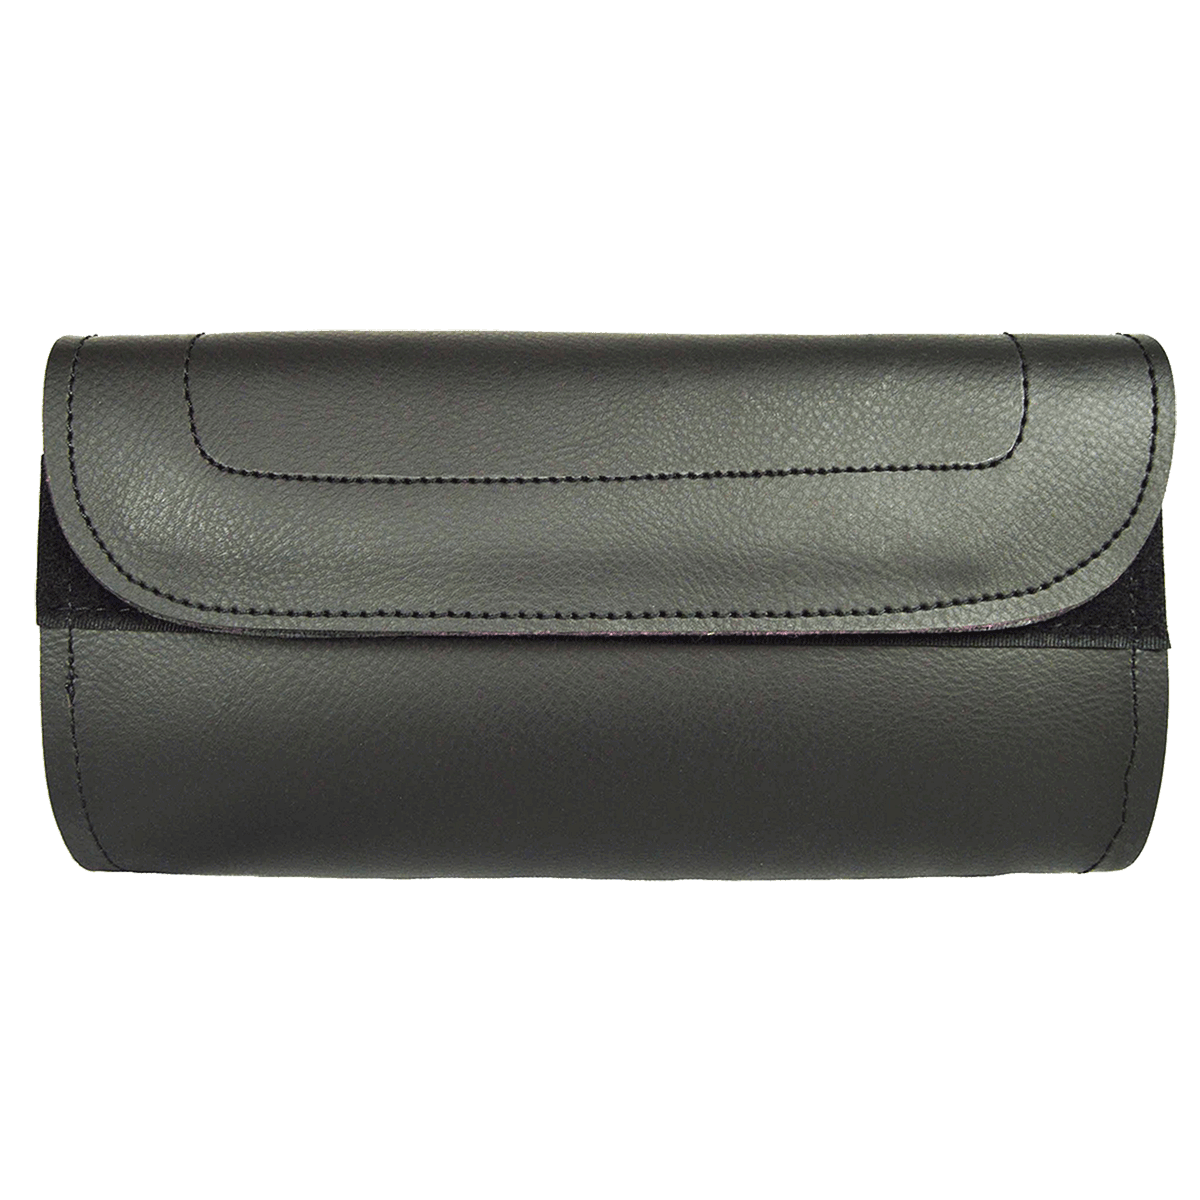 VS124H Plain Velcro Tool Bag with Hard Shell